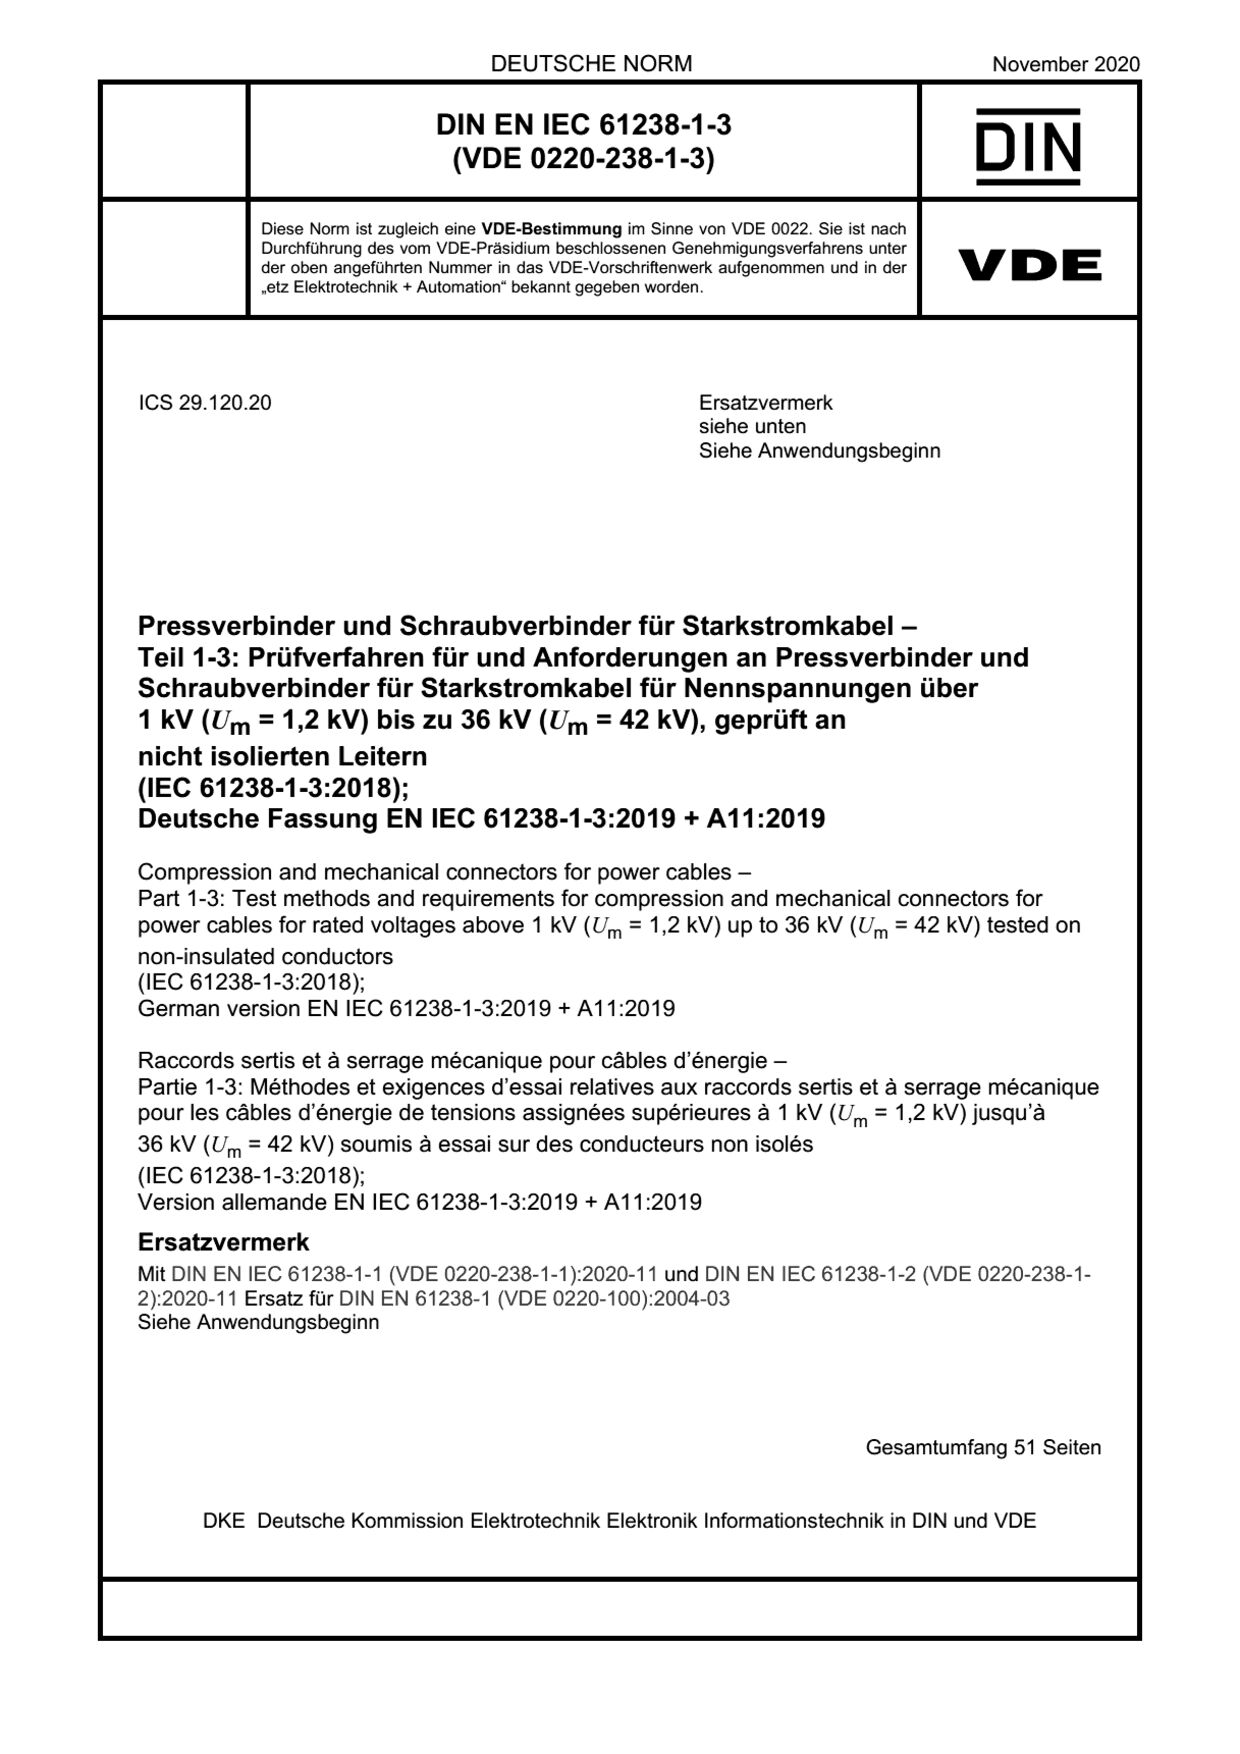 DIN EN IEC 61238-1-3:2020封面图